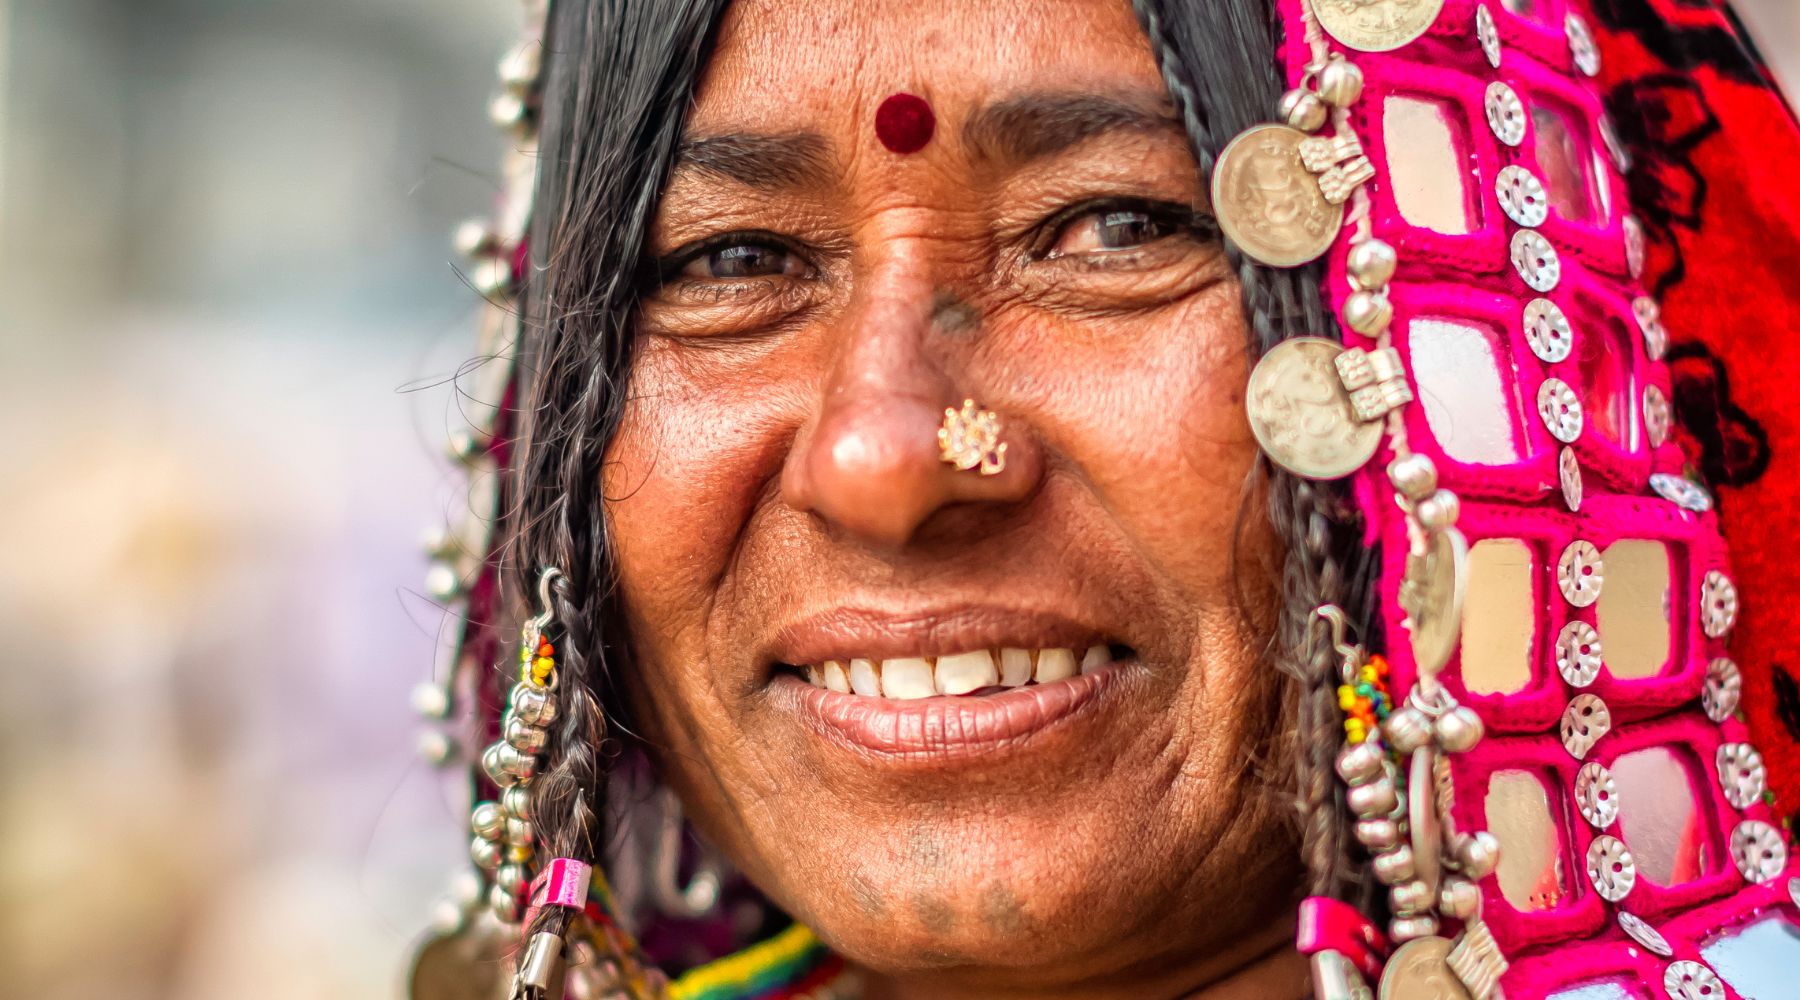 Spotlight On: Munnade Social Organisation- Empowering India’s Garment Workers